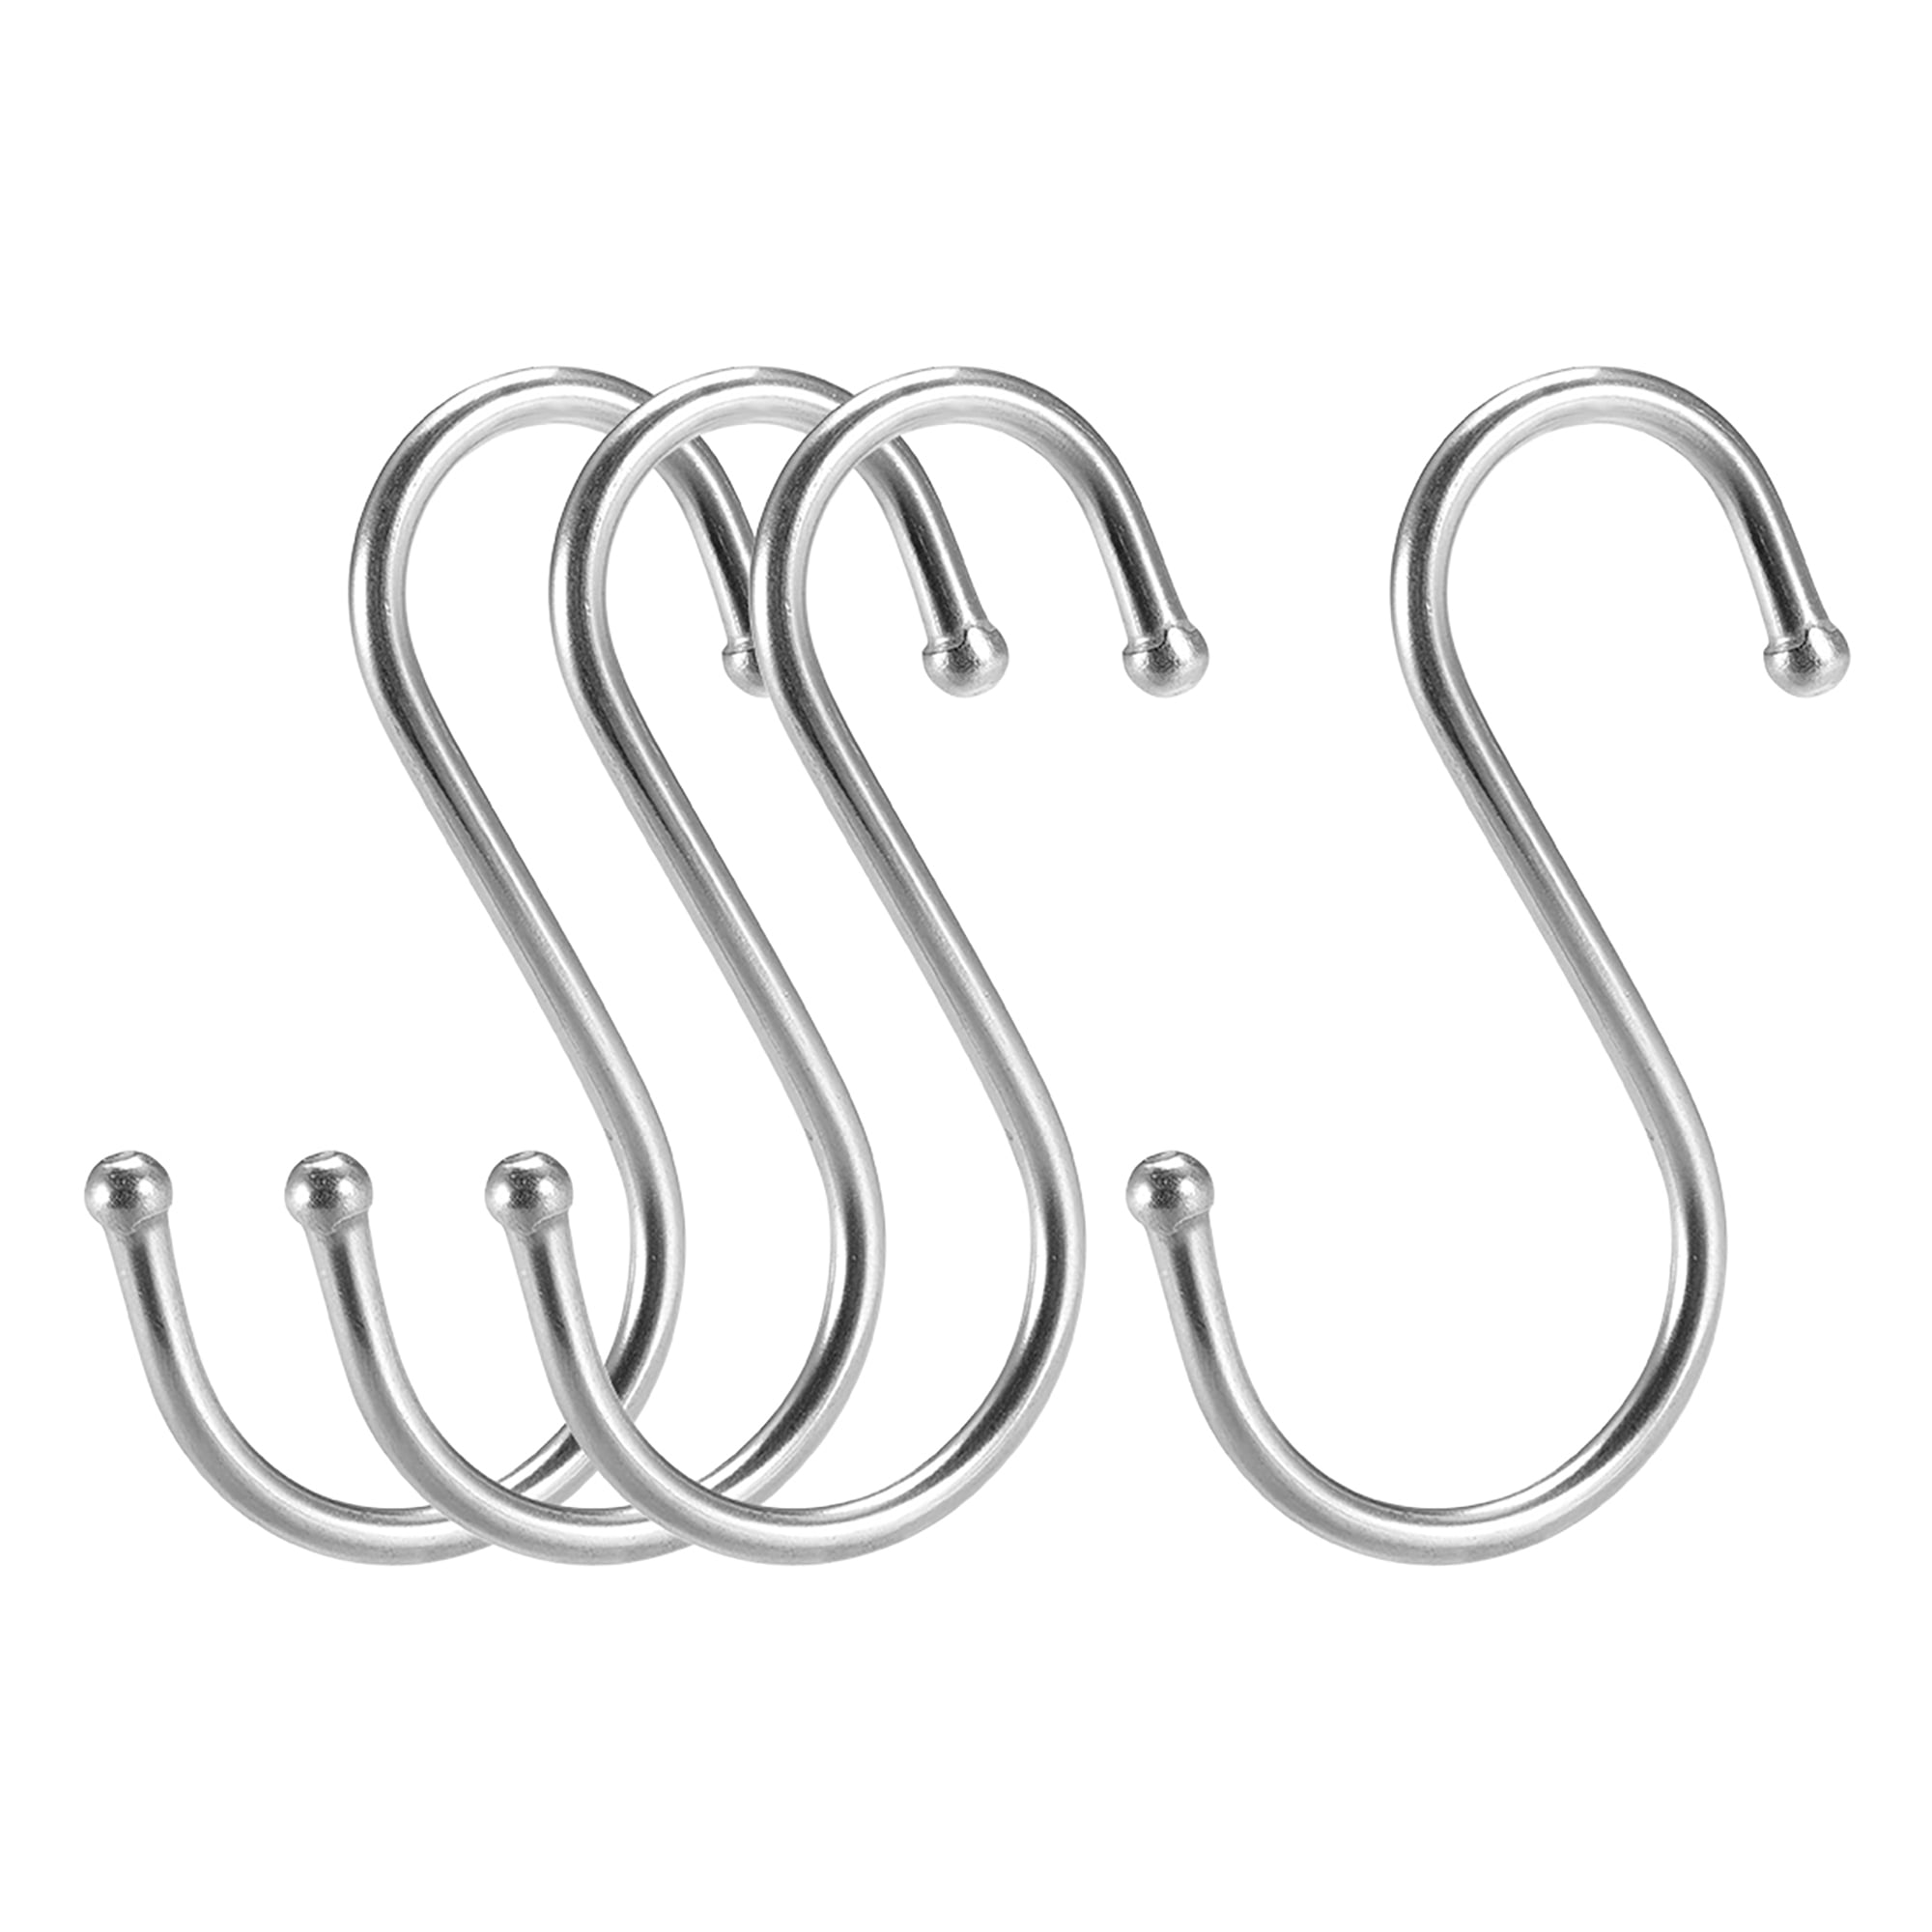 Details about   5pcs S Shaped Hanging Hooks Steel for Kitchen Bathroom Bedroom Hangers 